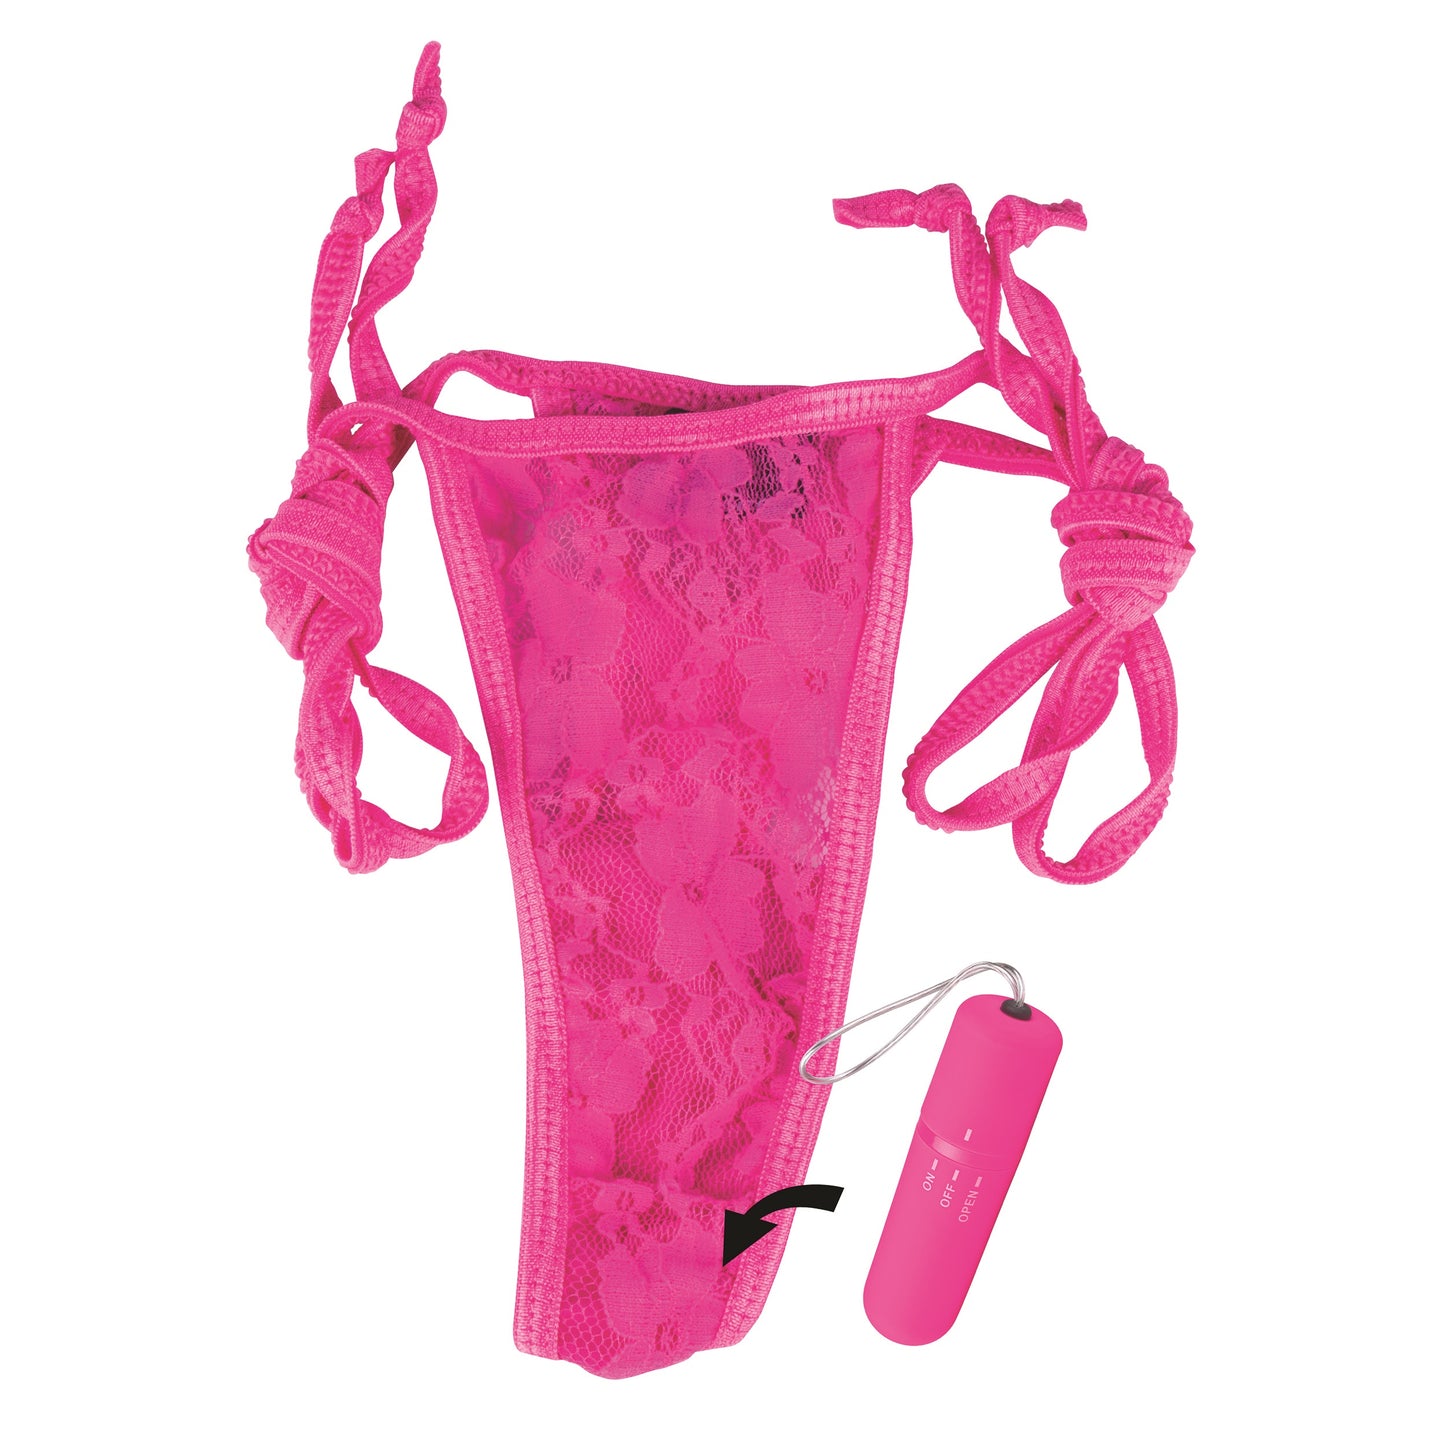 My Secret Screaming O Vibrating Panty Set - Pink - Each